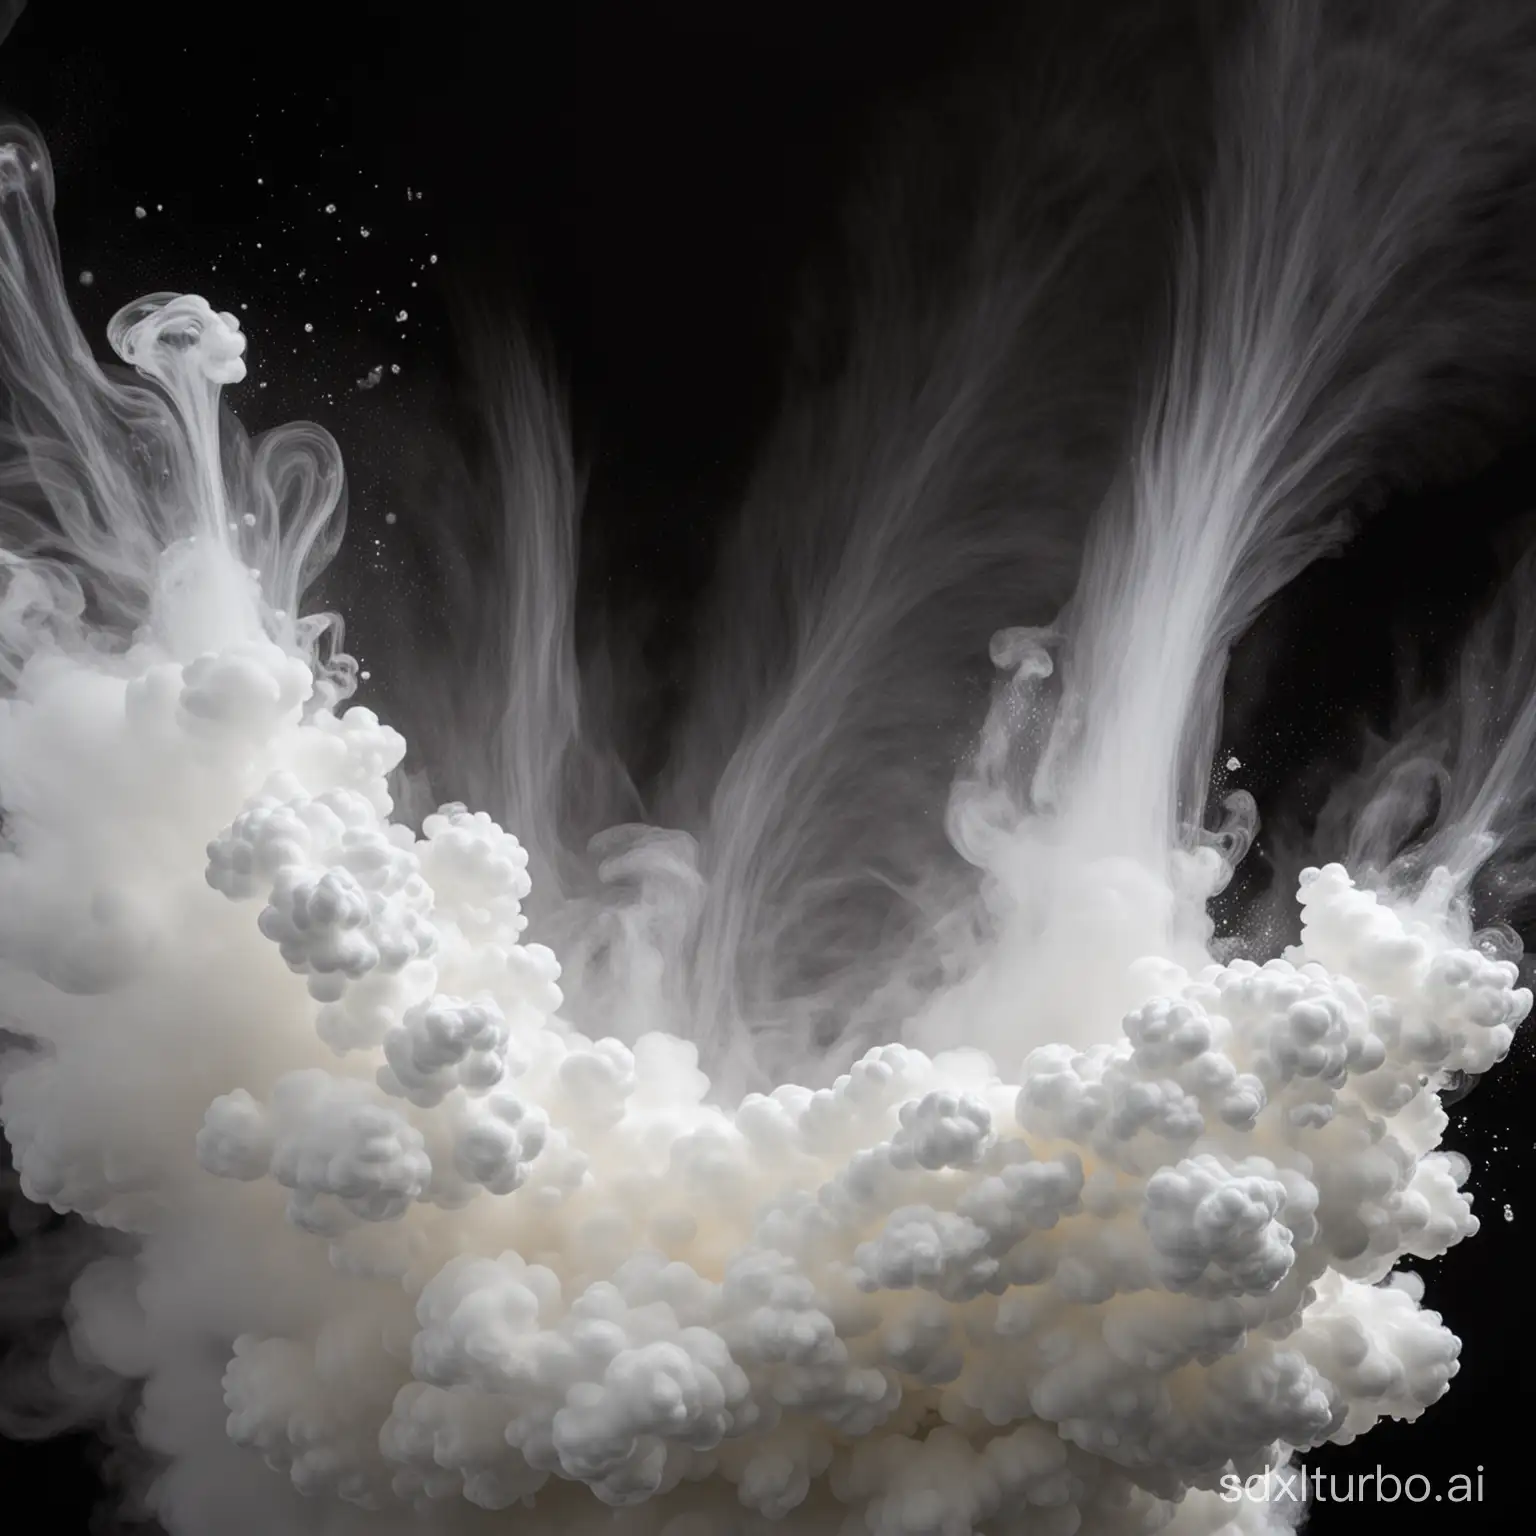 High quality,liquid nitrogen heat treatment,cold mist,detailed close-up,black background.